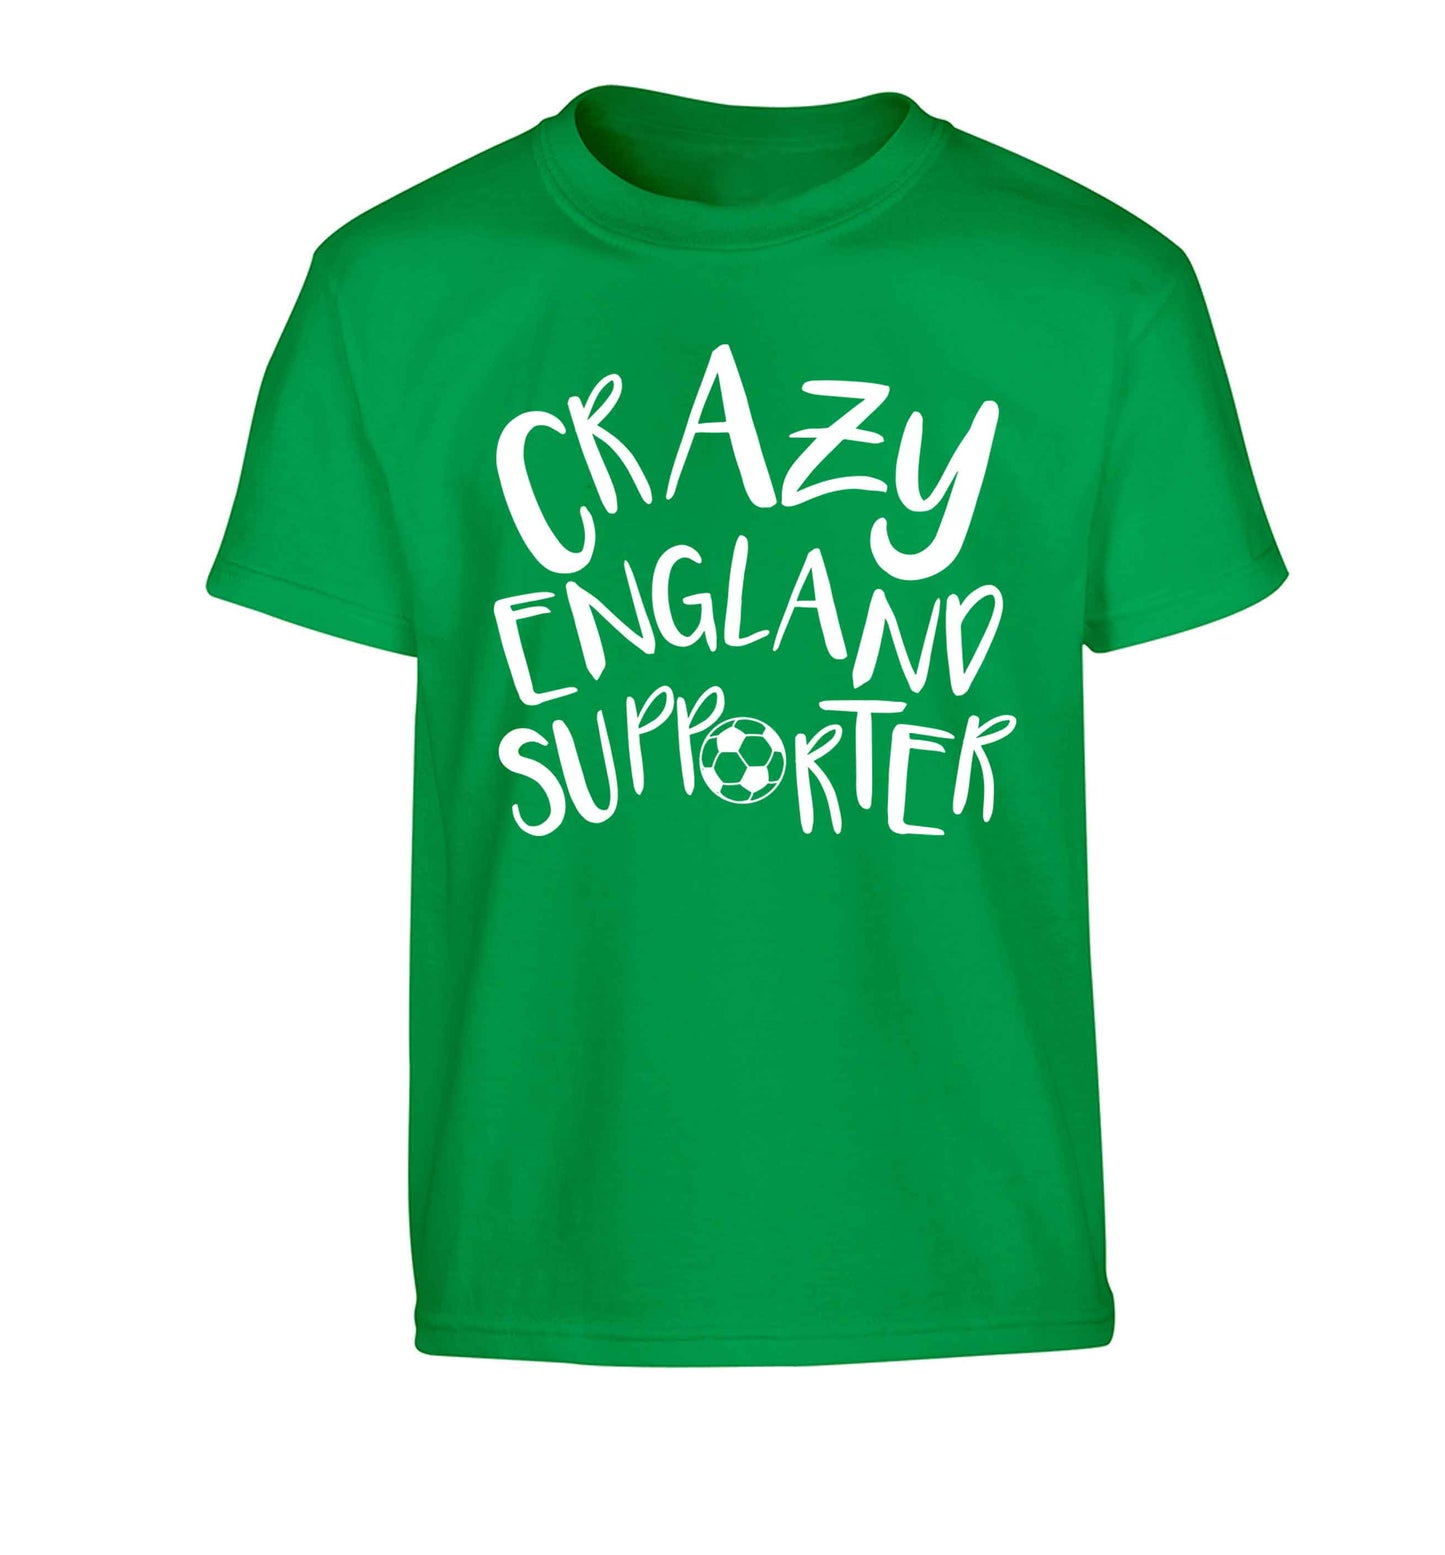 Crazy England supporter Children's green Tshirt 12-13 Years